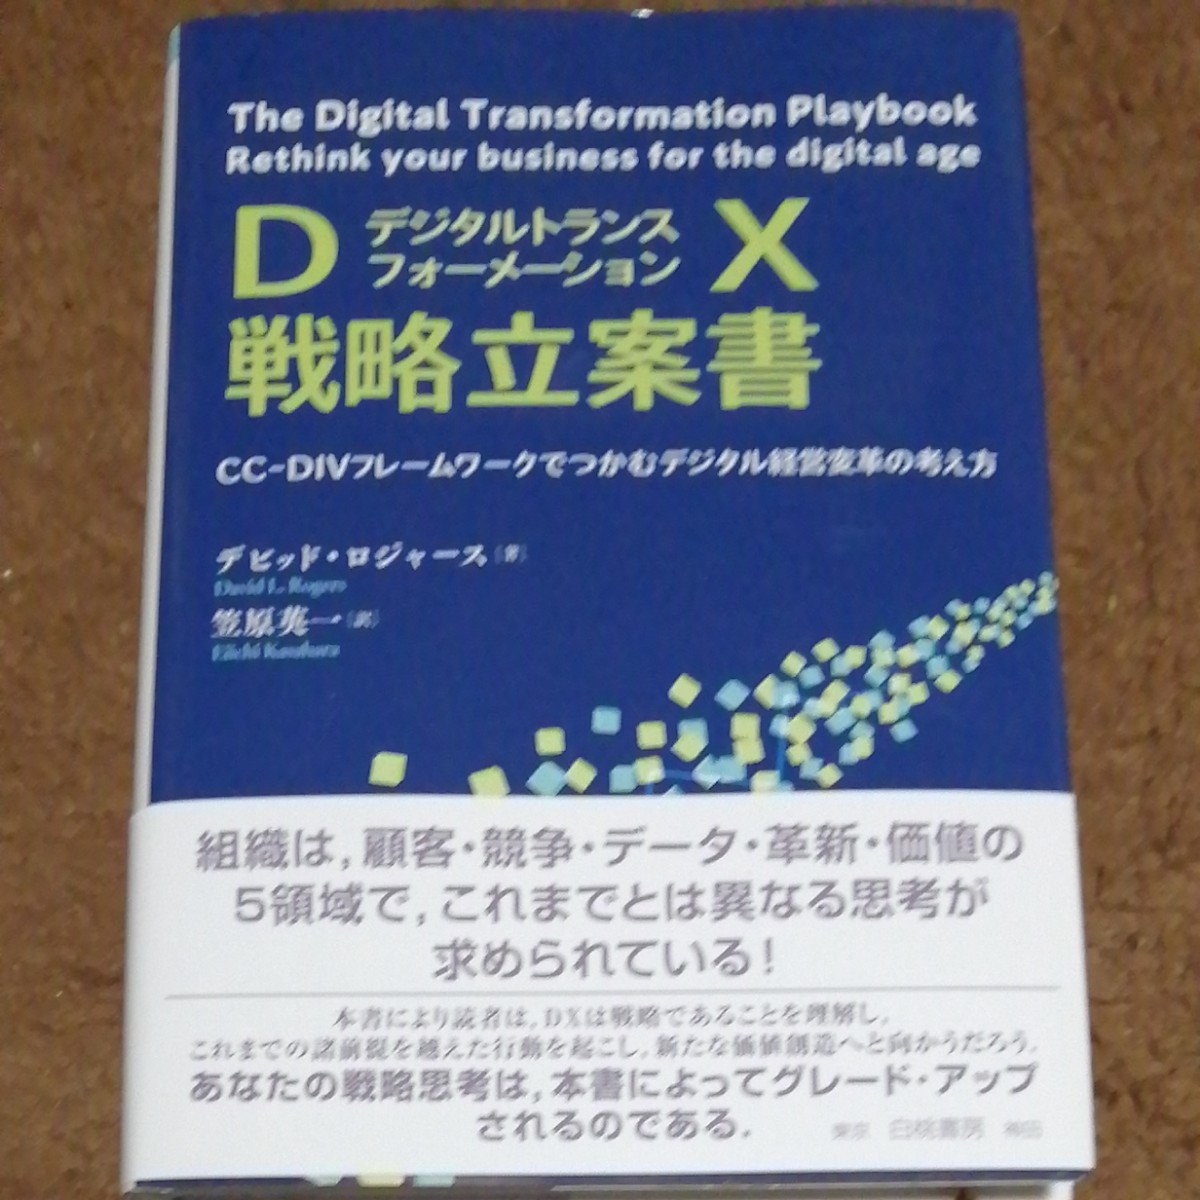 「DX戦略立案書 CC-DIVフレームワークでつかむデジタル経営変革の考え方」